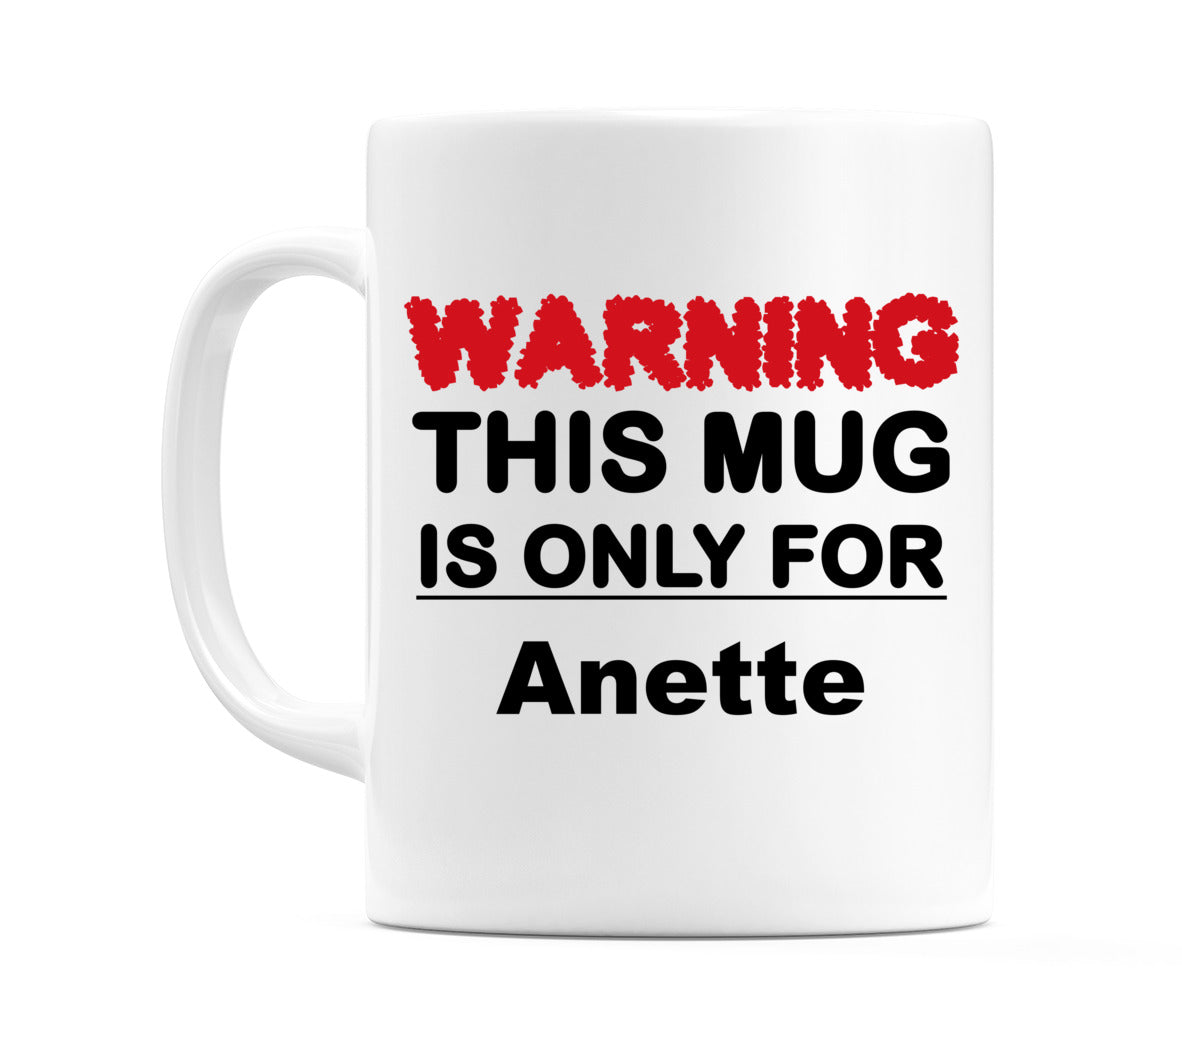 Warning This Mug is ONLY for Anette Mug